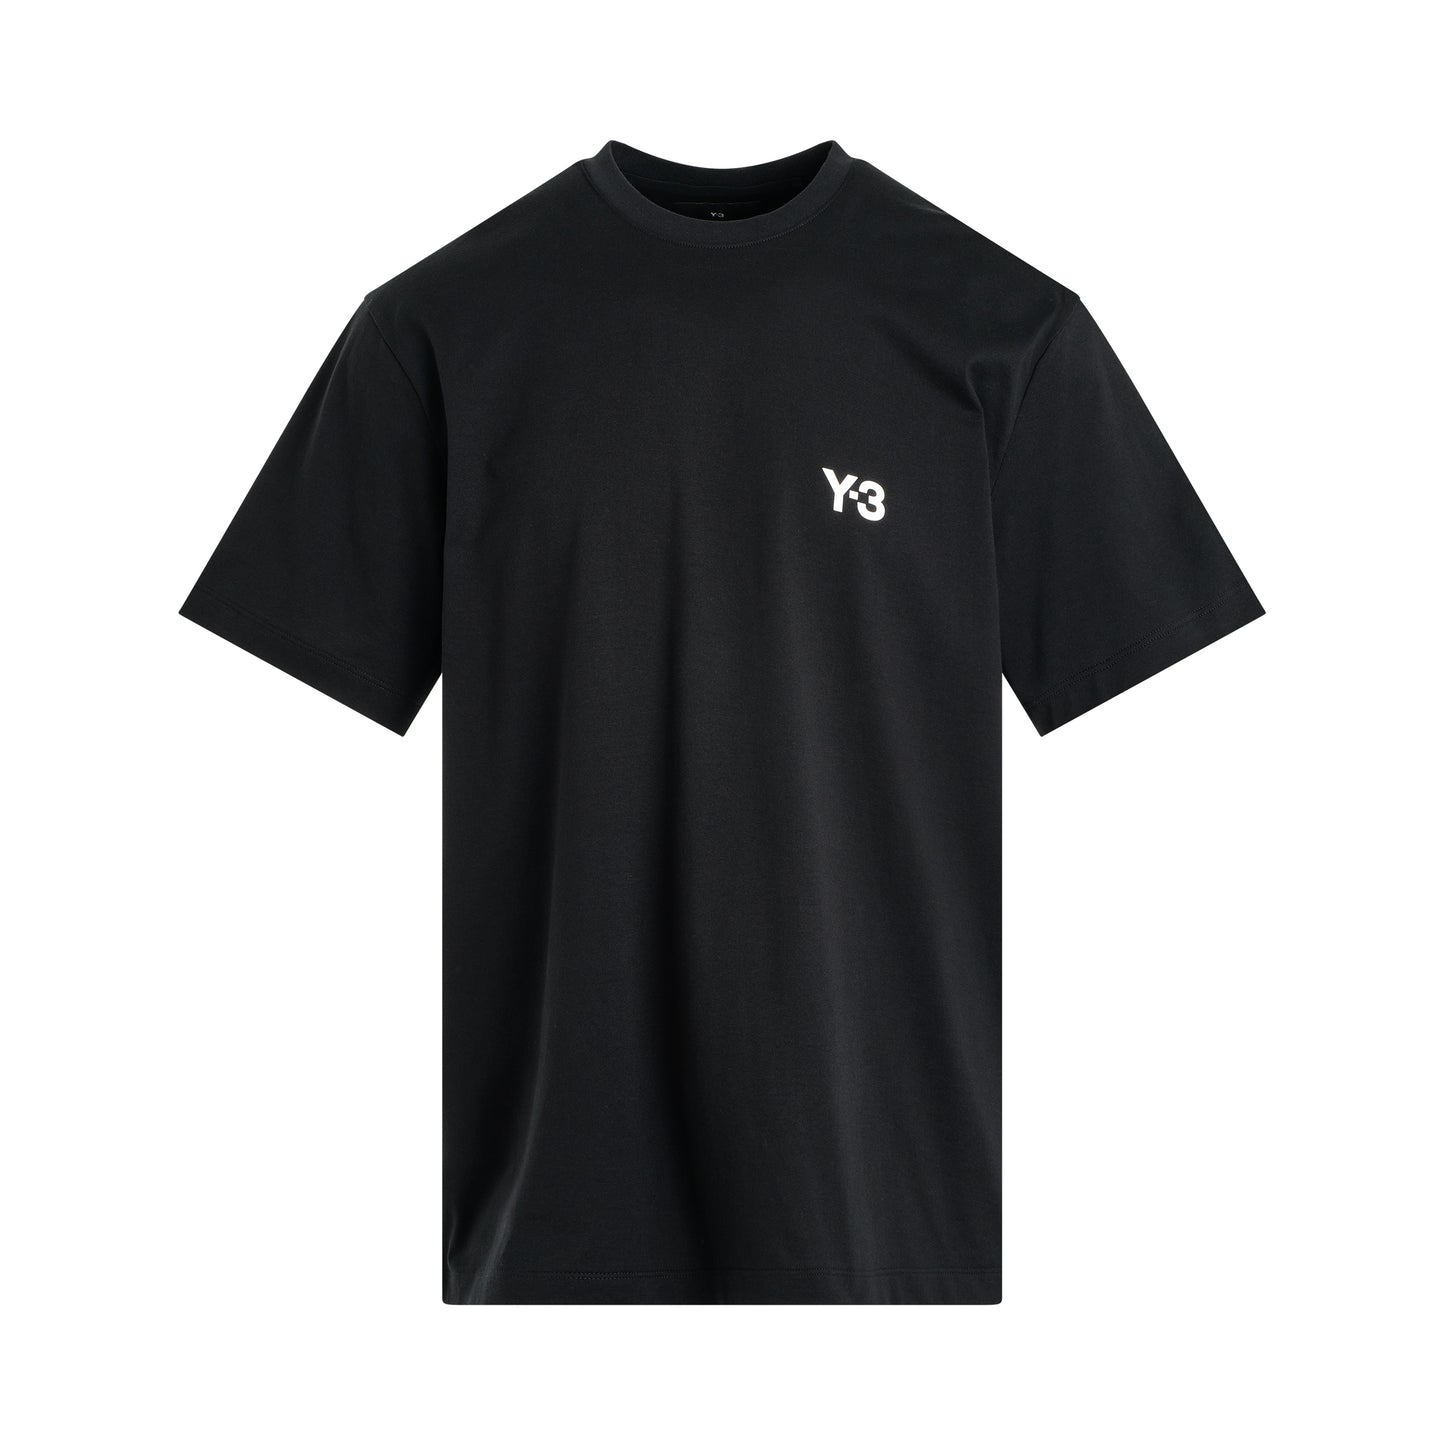 Y-3 x Real Madrid T-Shirt in Black